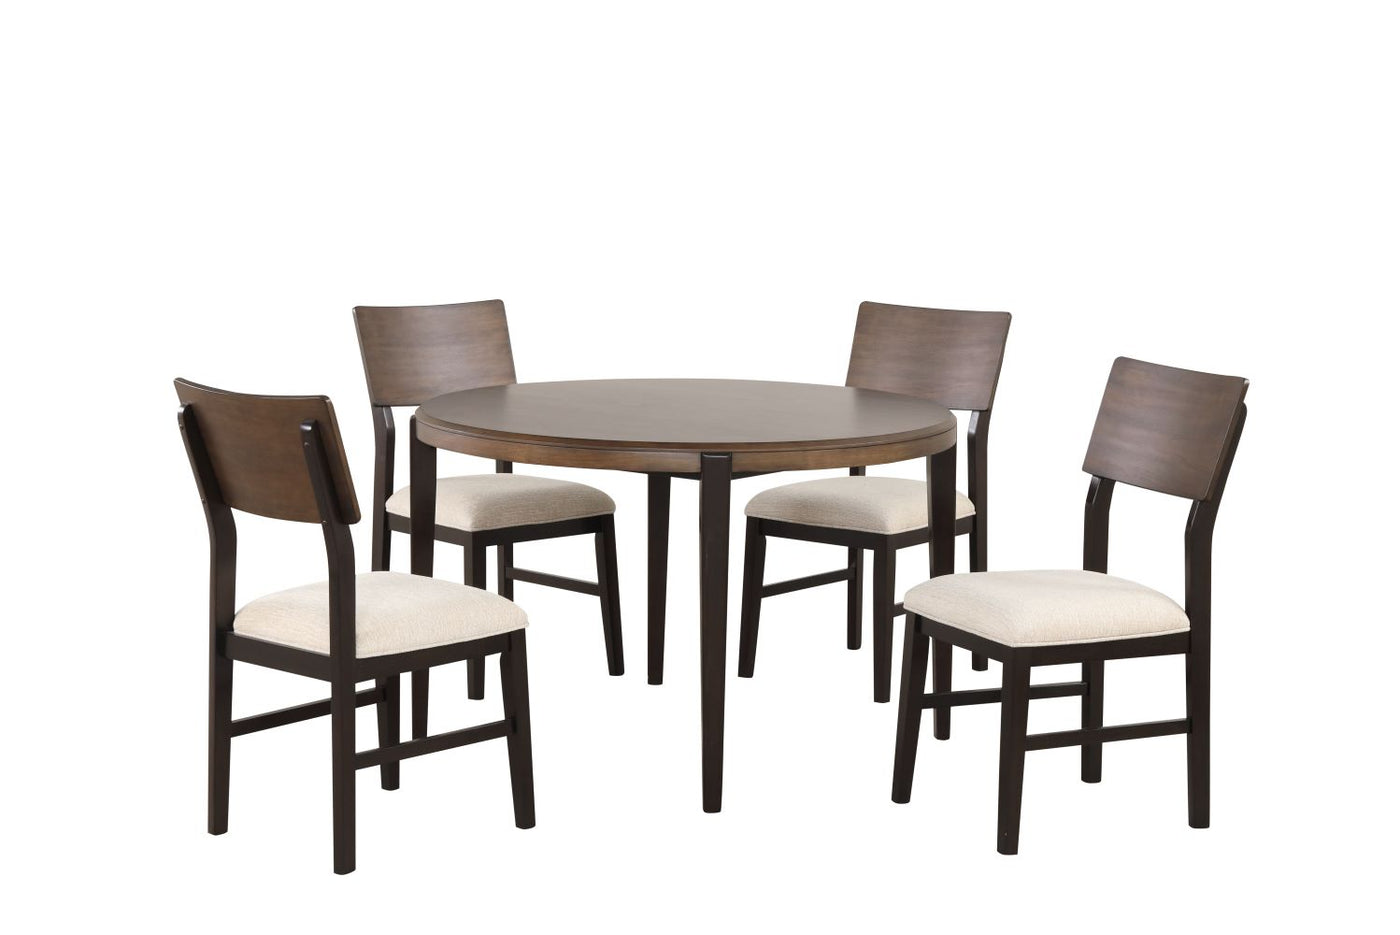 Arabella Round Dining Table - Black, Brown